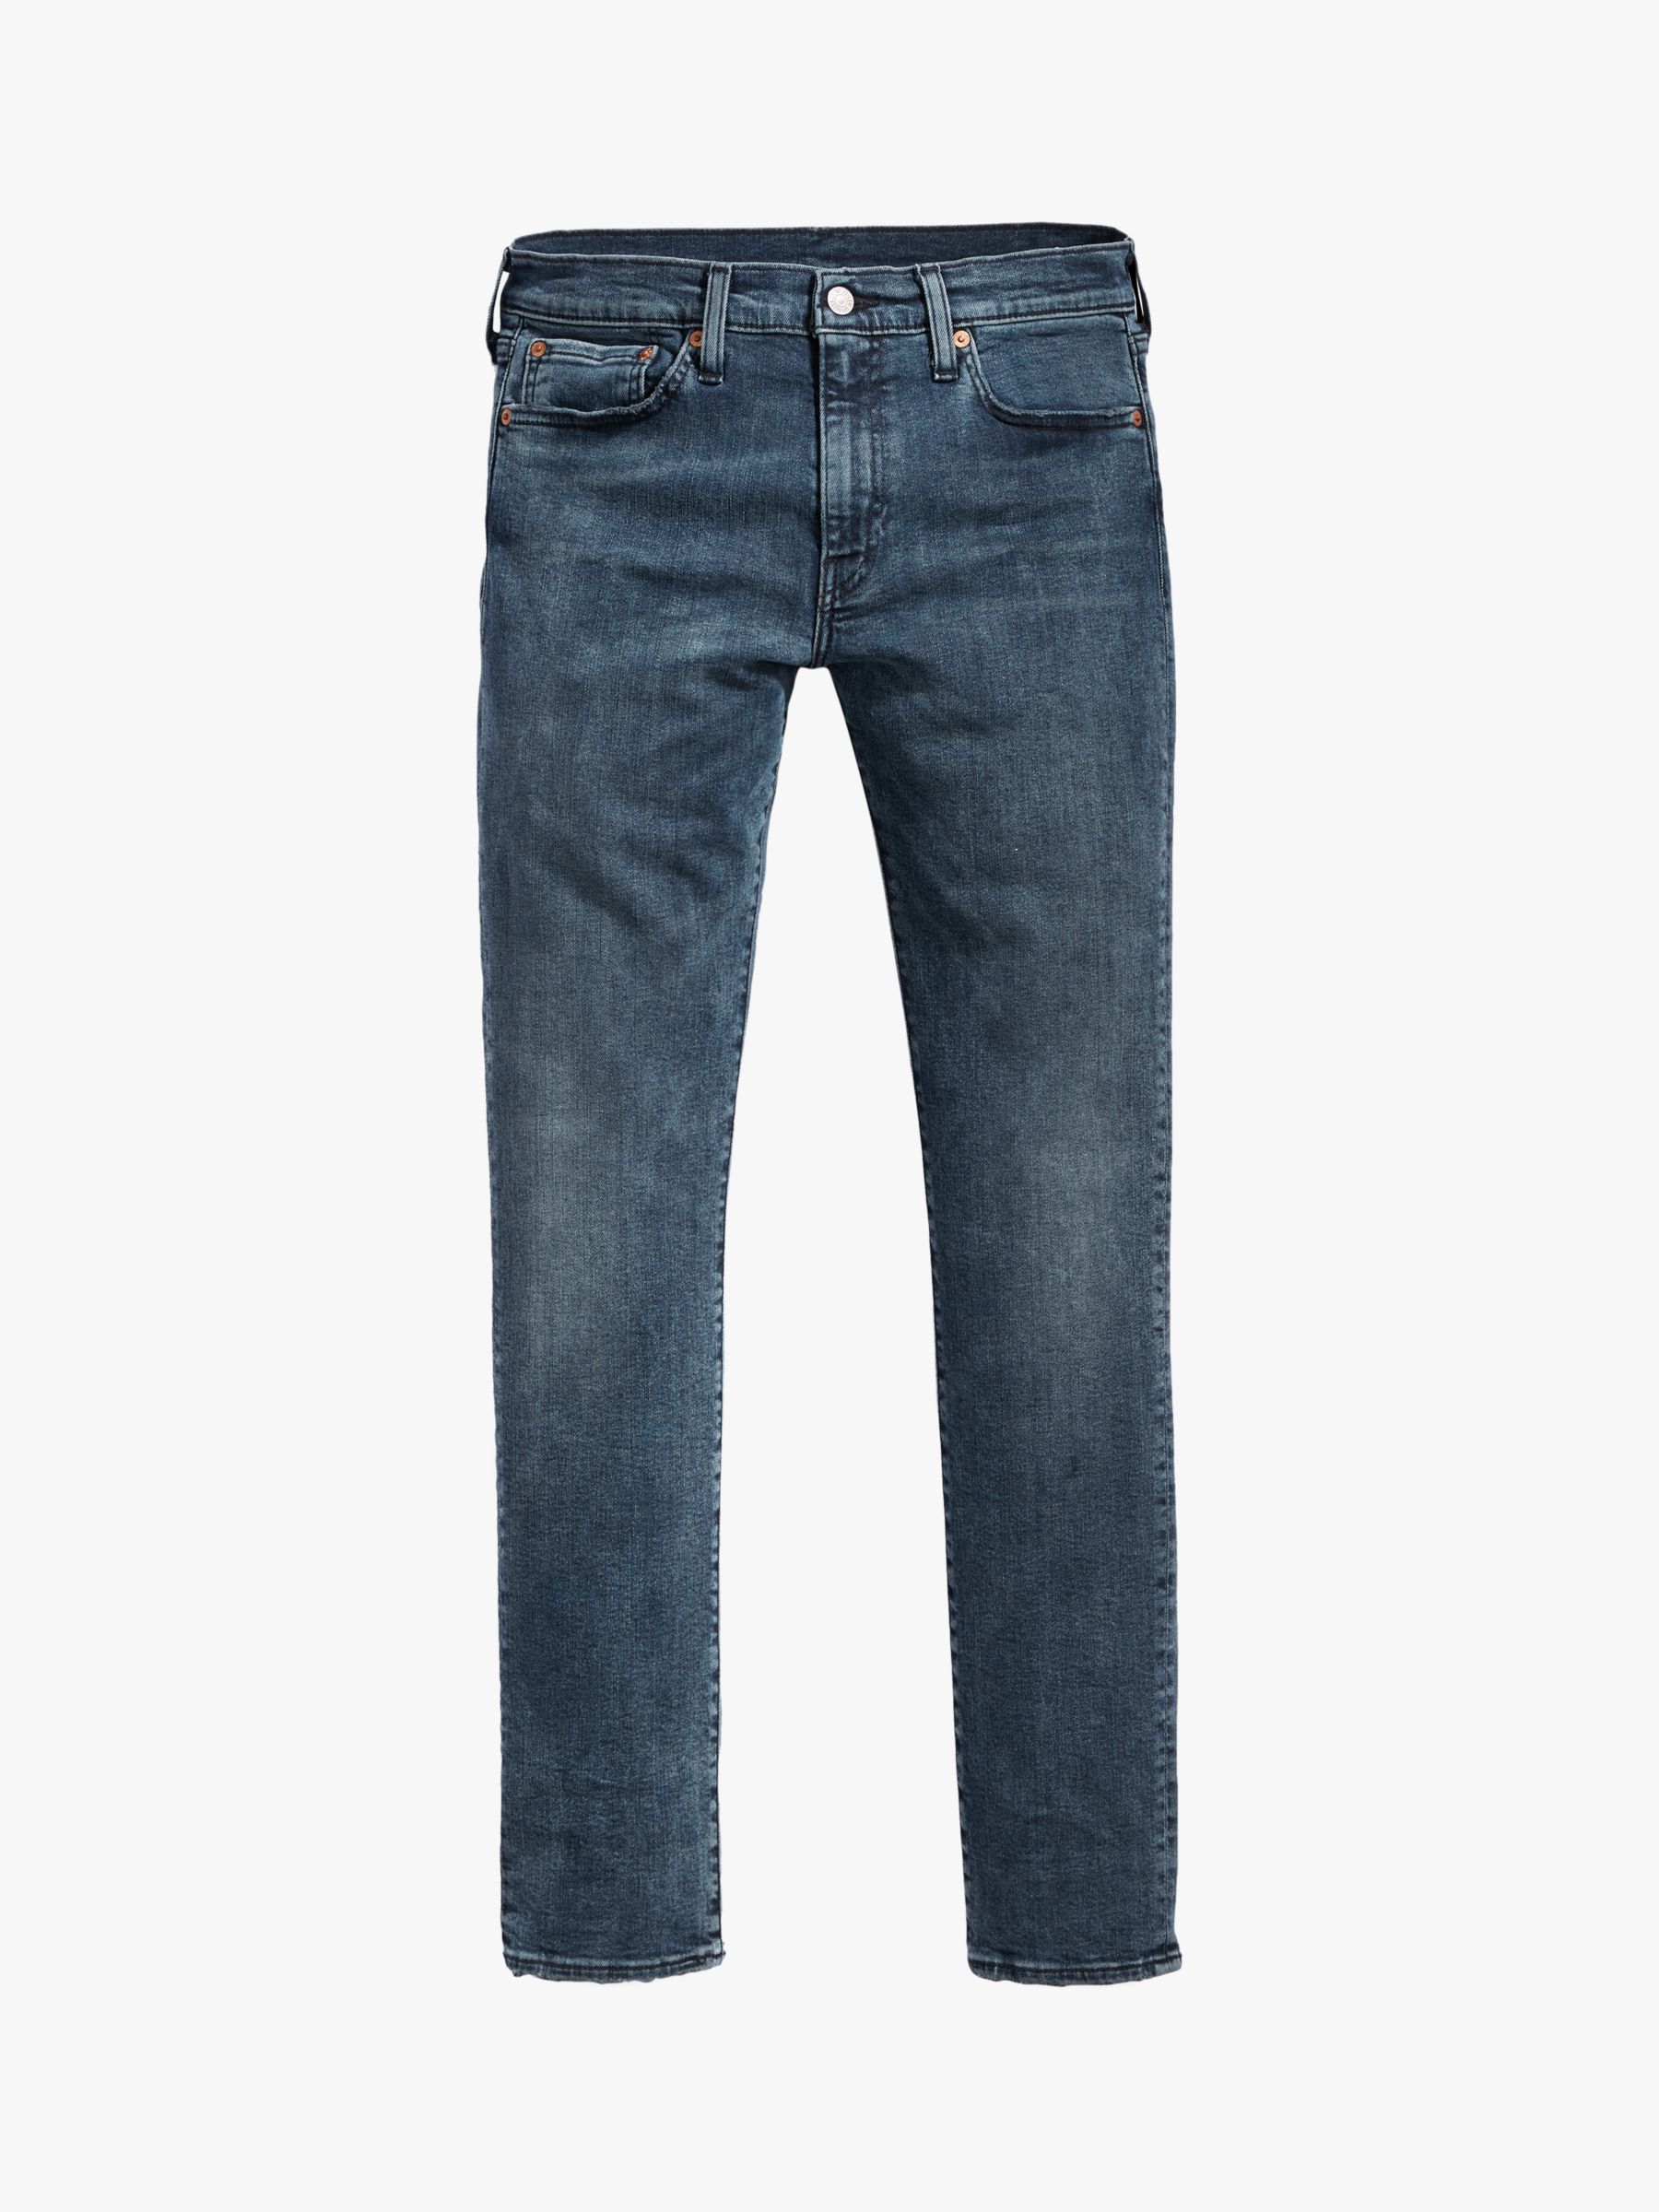 Levi's 511 Slim Fit Jeans, Ali Adv at 